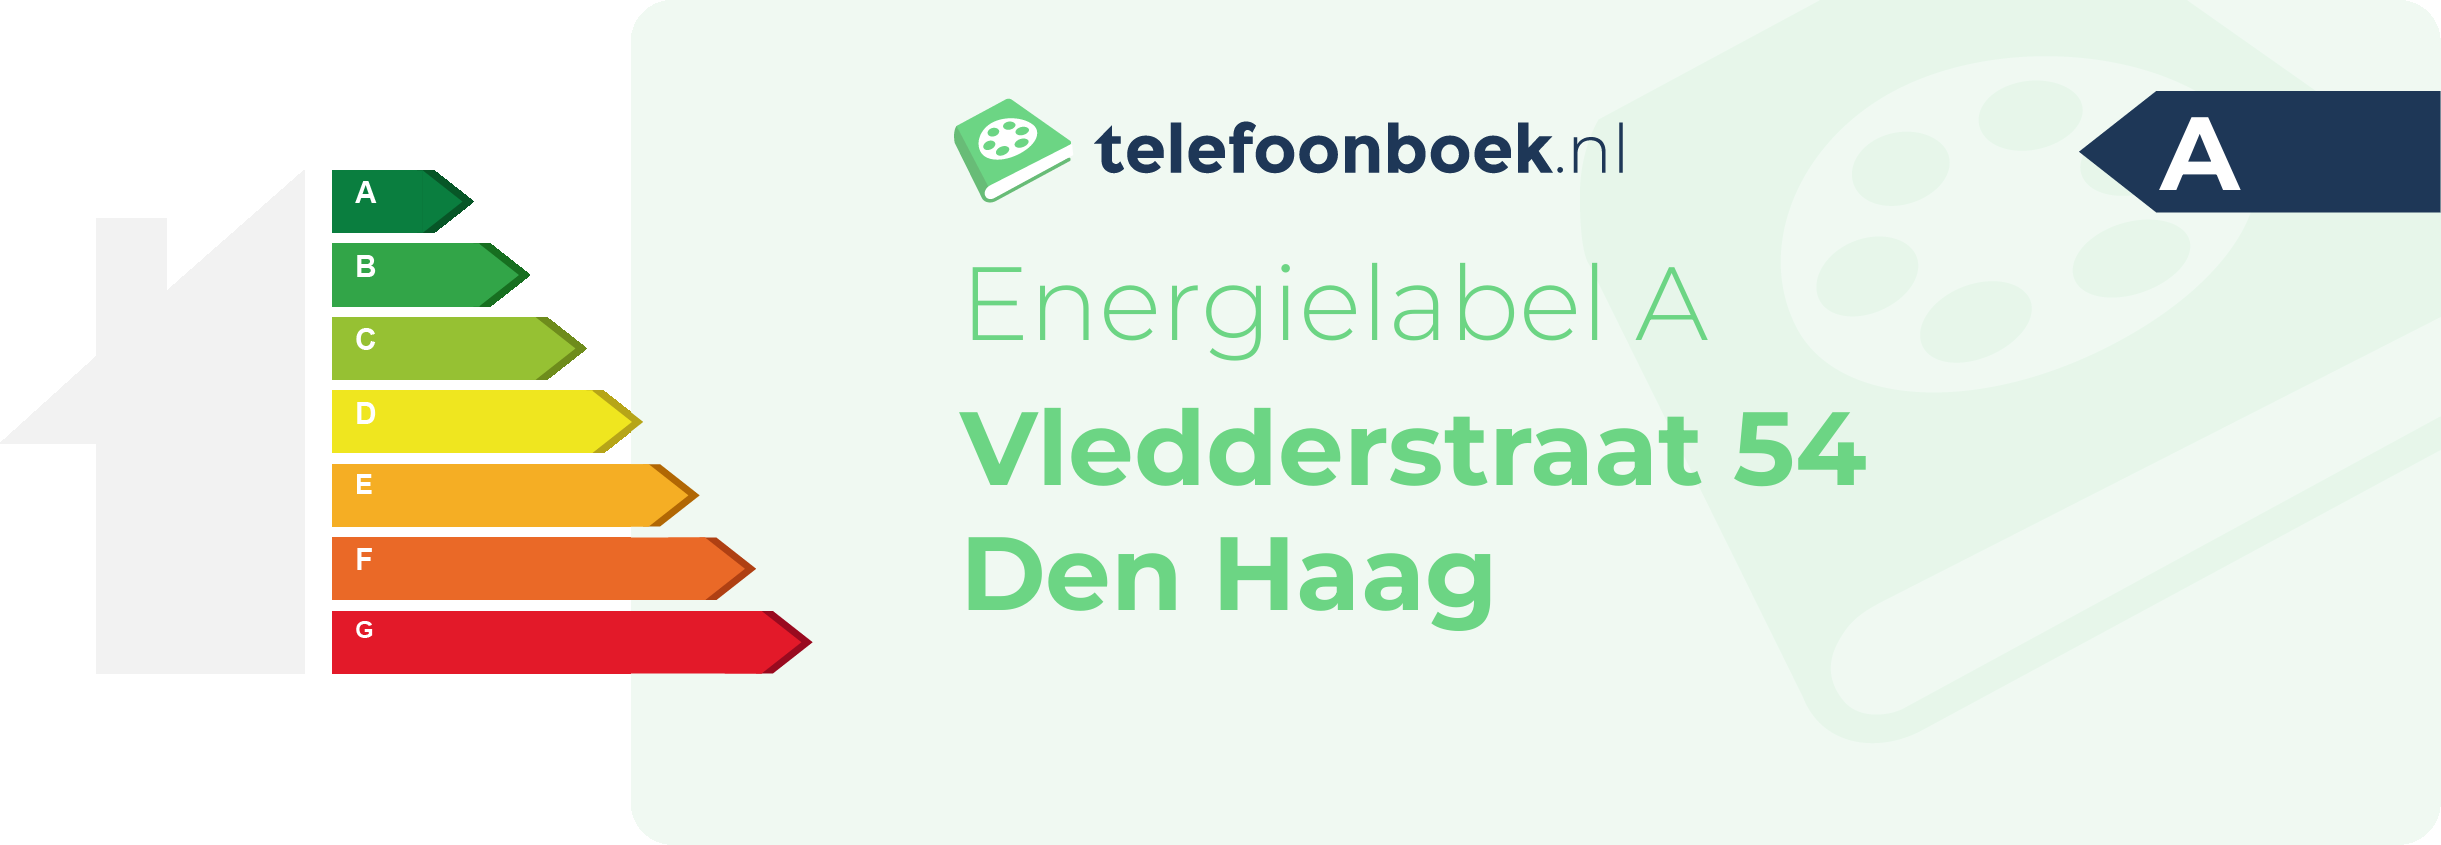 Energielabel Vledderstraat 54 Den Haag